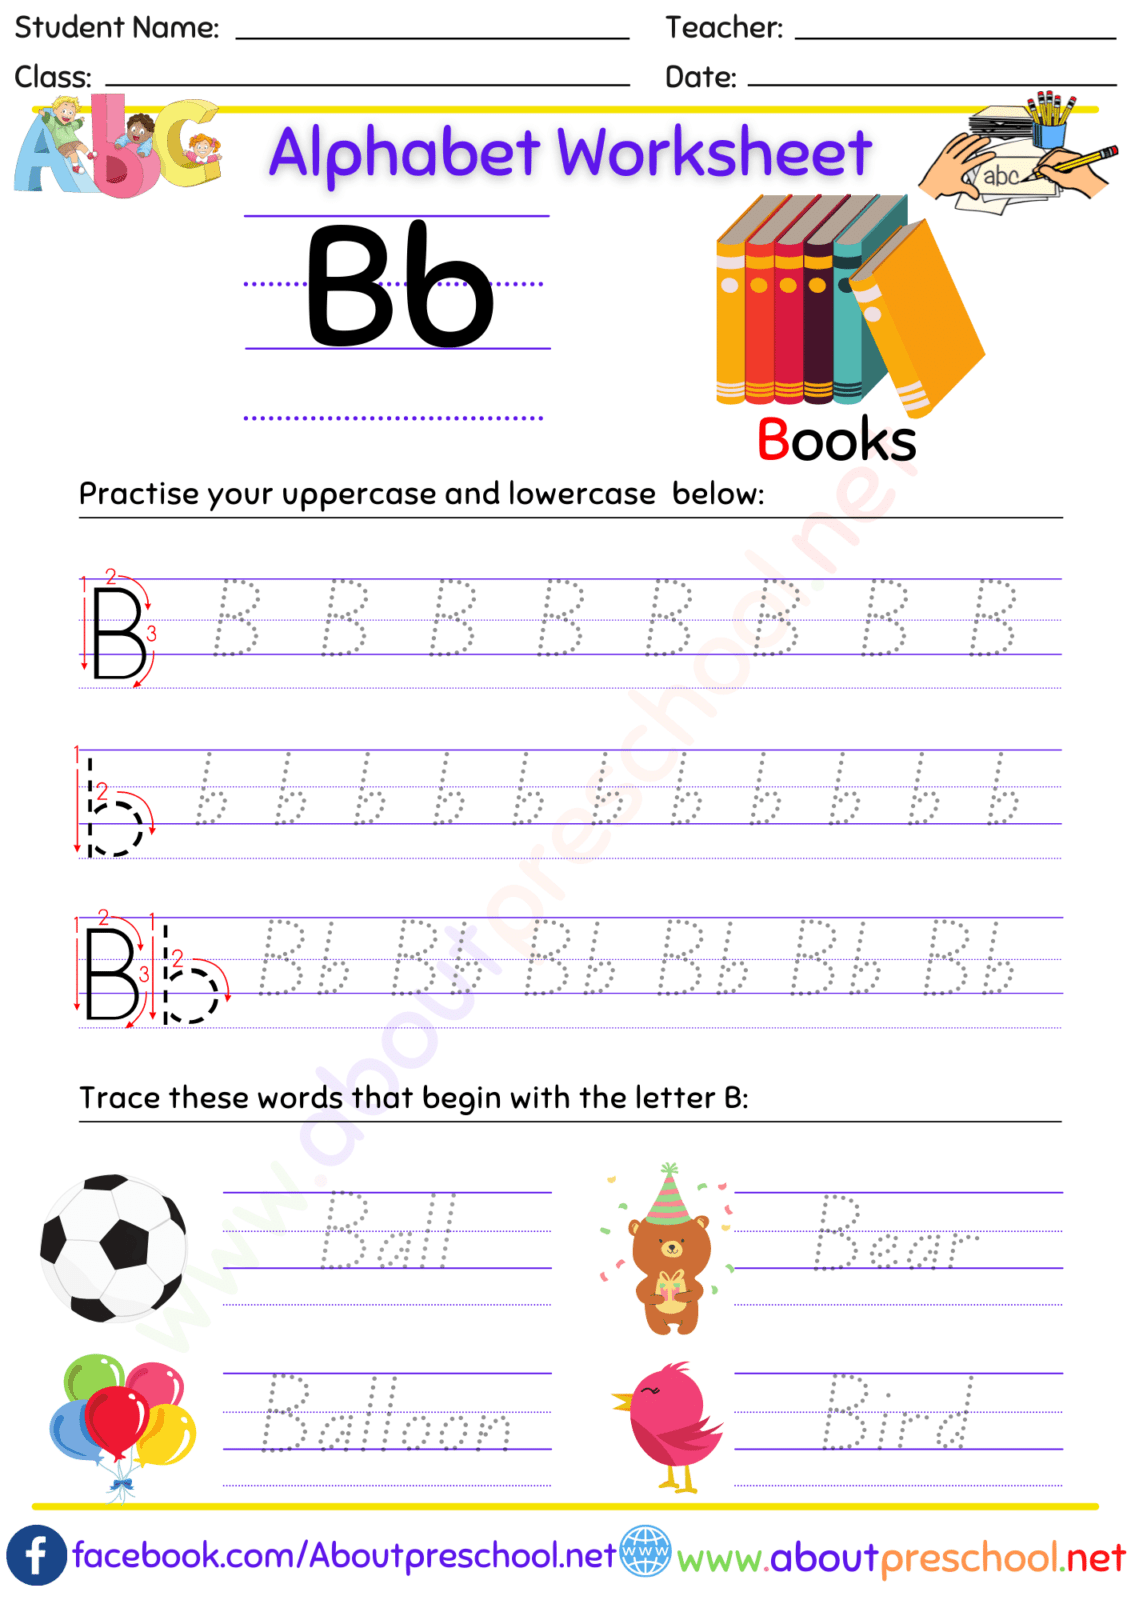 The Alphabet Worksheets B